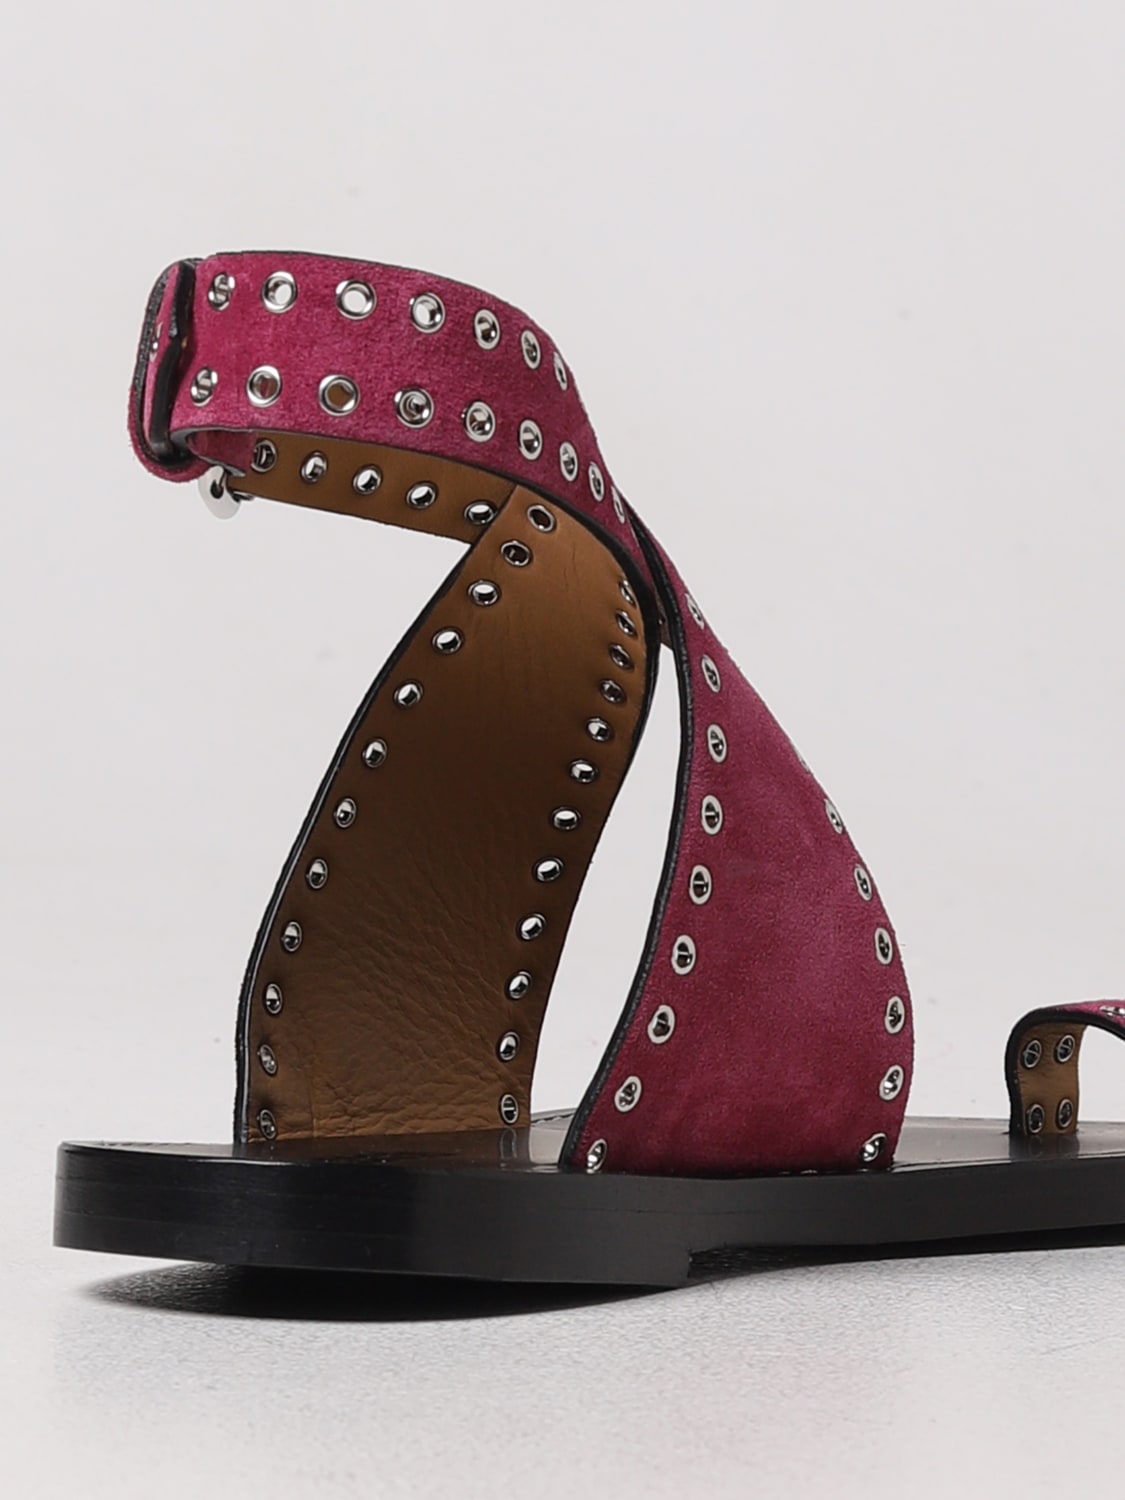 ISABEL MARANT: flat sandals woman Raspberry | Isabel Marant flat sandals SD0007FAA1B14S online on GIGLIO.COM